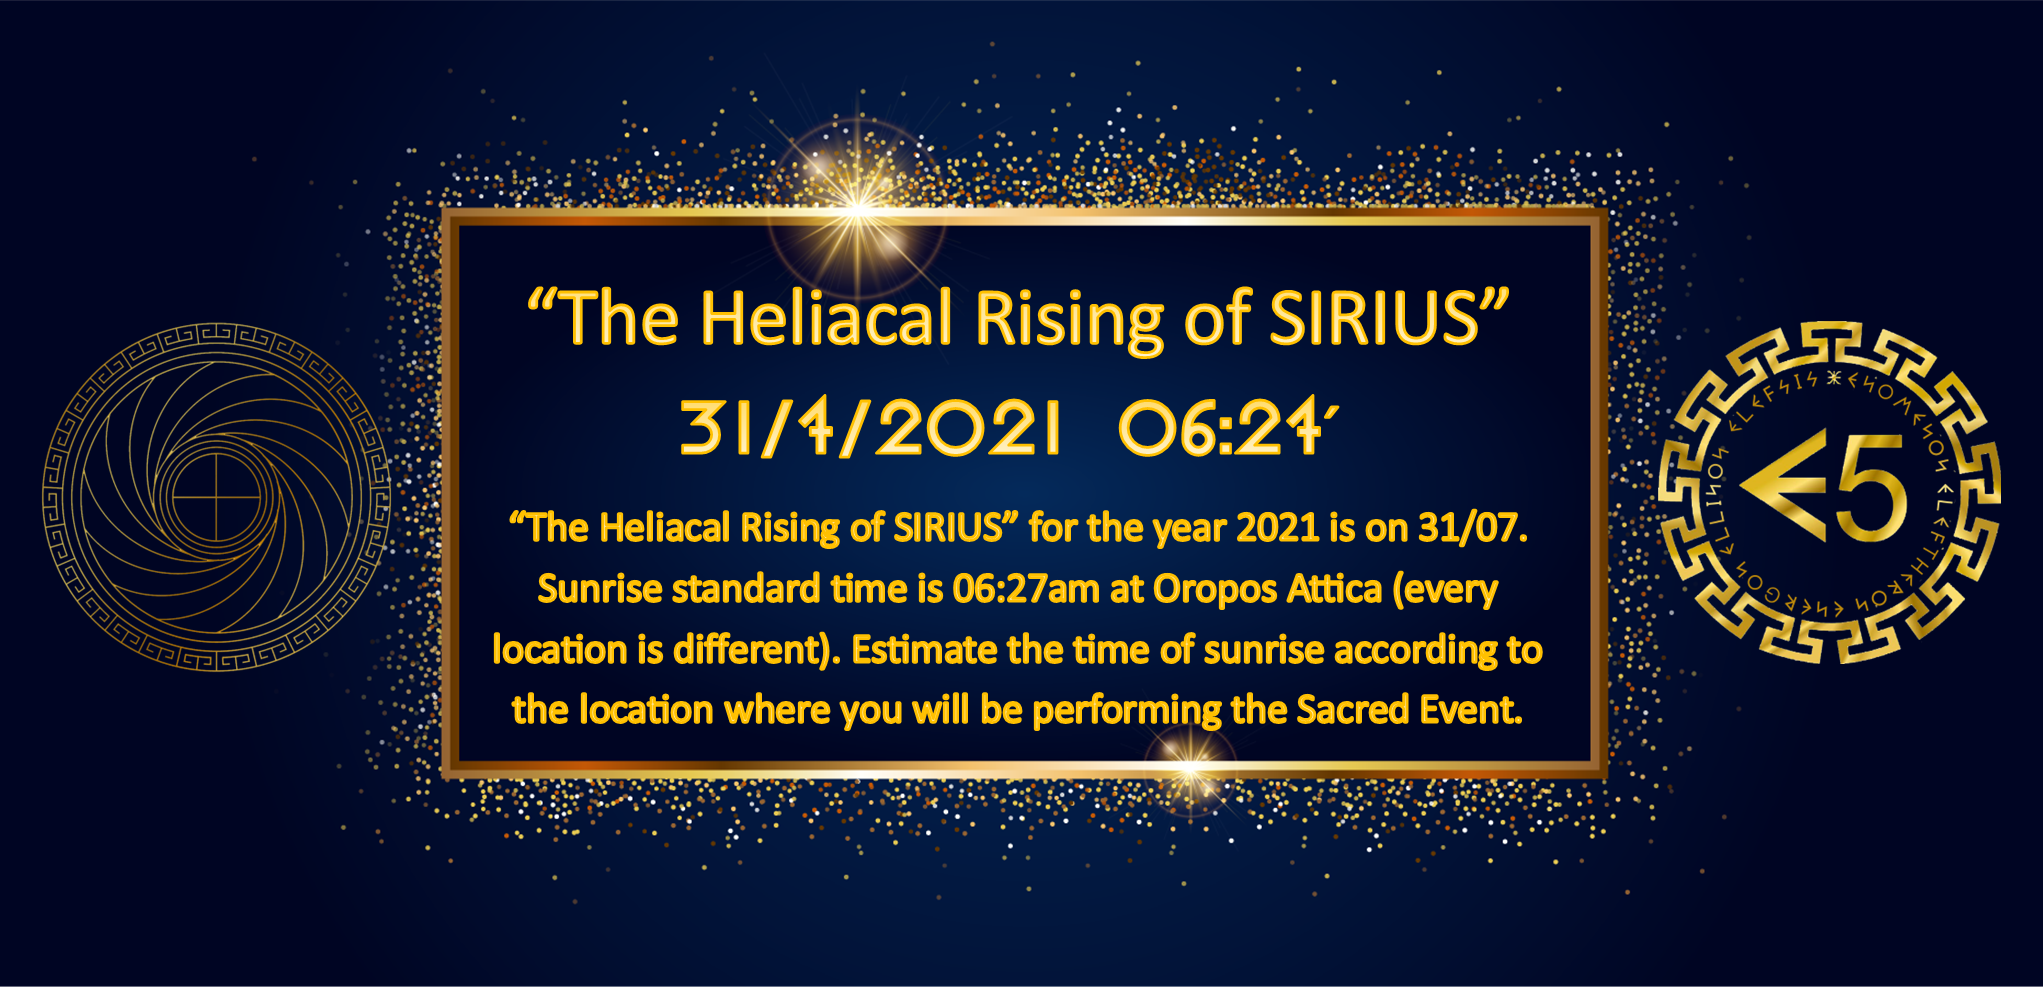 The Heliacal Rising Of SIRIUS Ε5 "ΕΛ.ΕΝ.ΕΛ.ΕΝ.Ε."